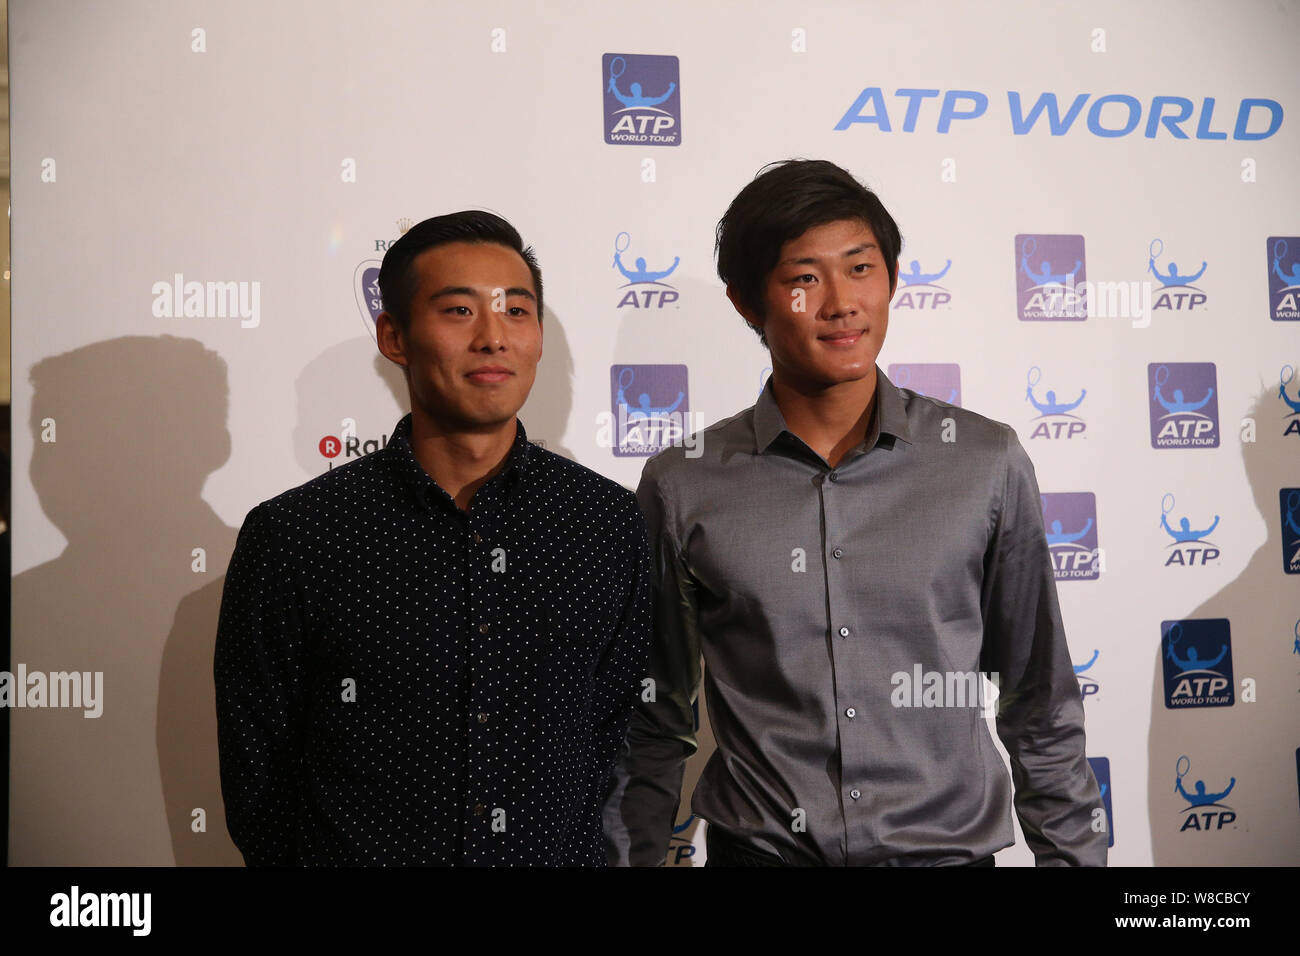 Zhang Ze, left, and Zhang Zhizhen of China pose during the 